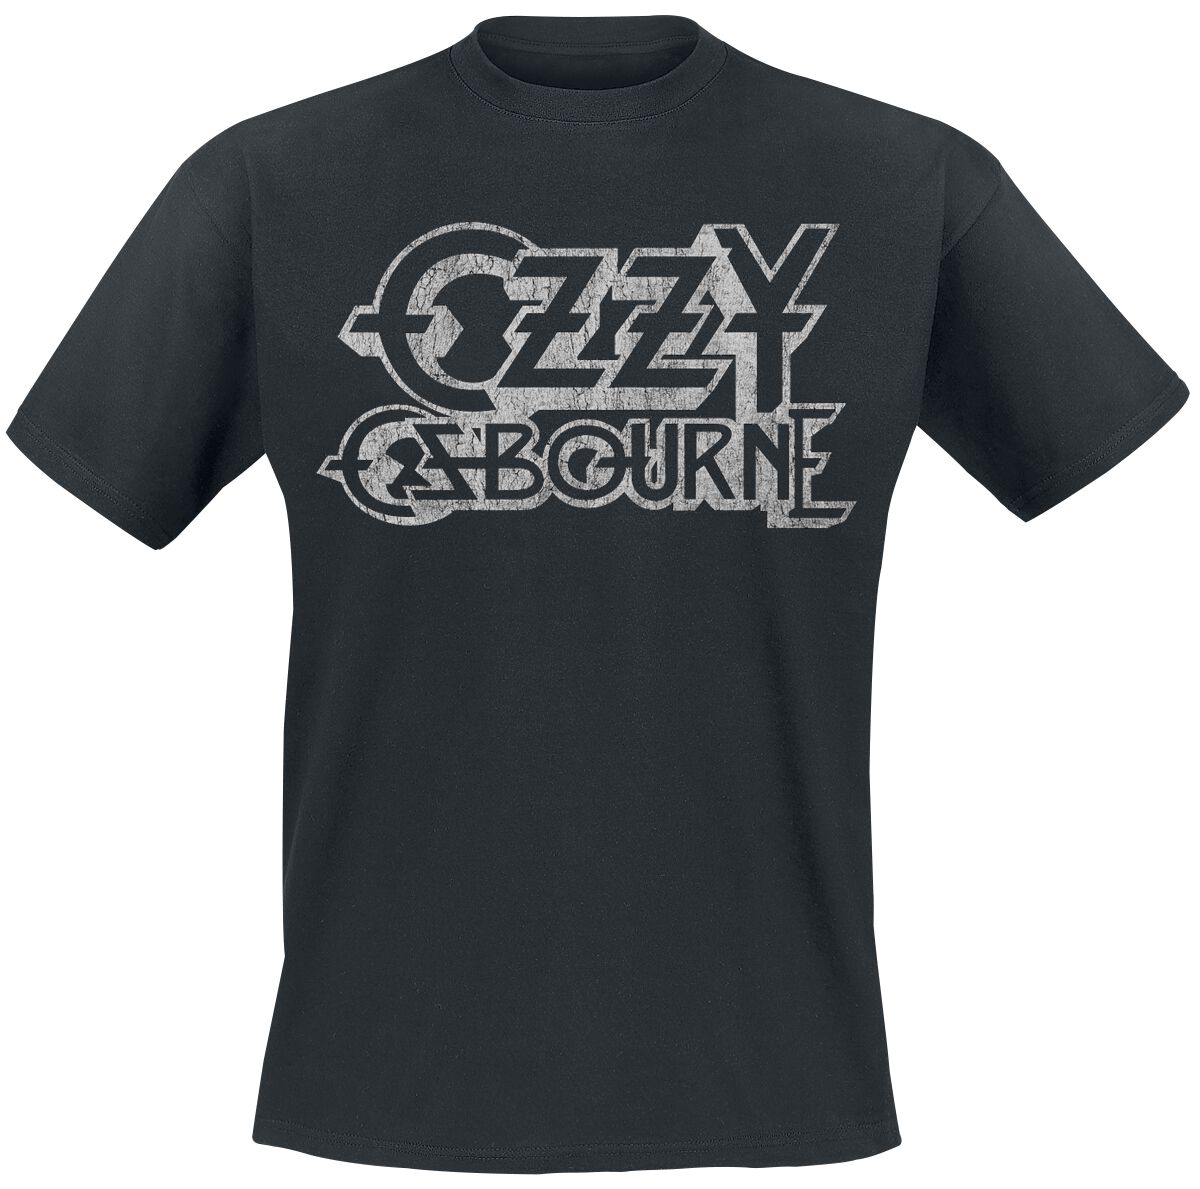 Image of T-Shirt di Ozzy Osbourne - Vintage Logo - S a XXL - Uomo - nero